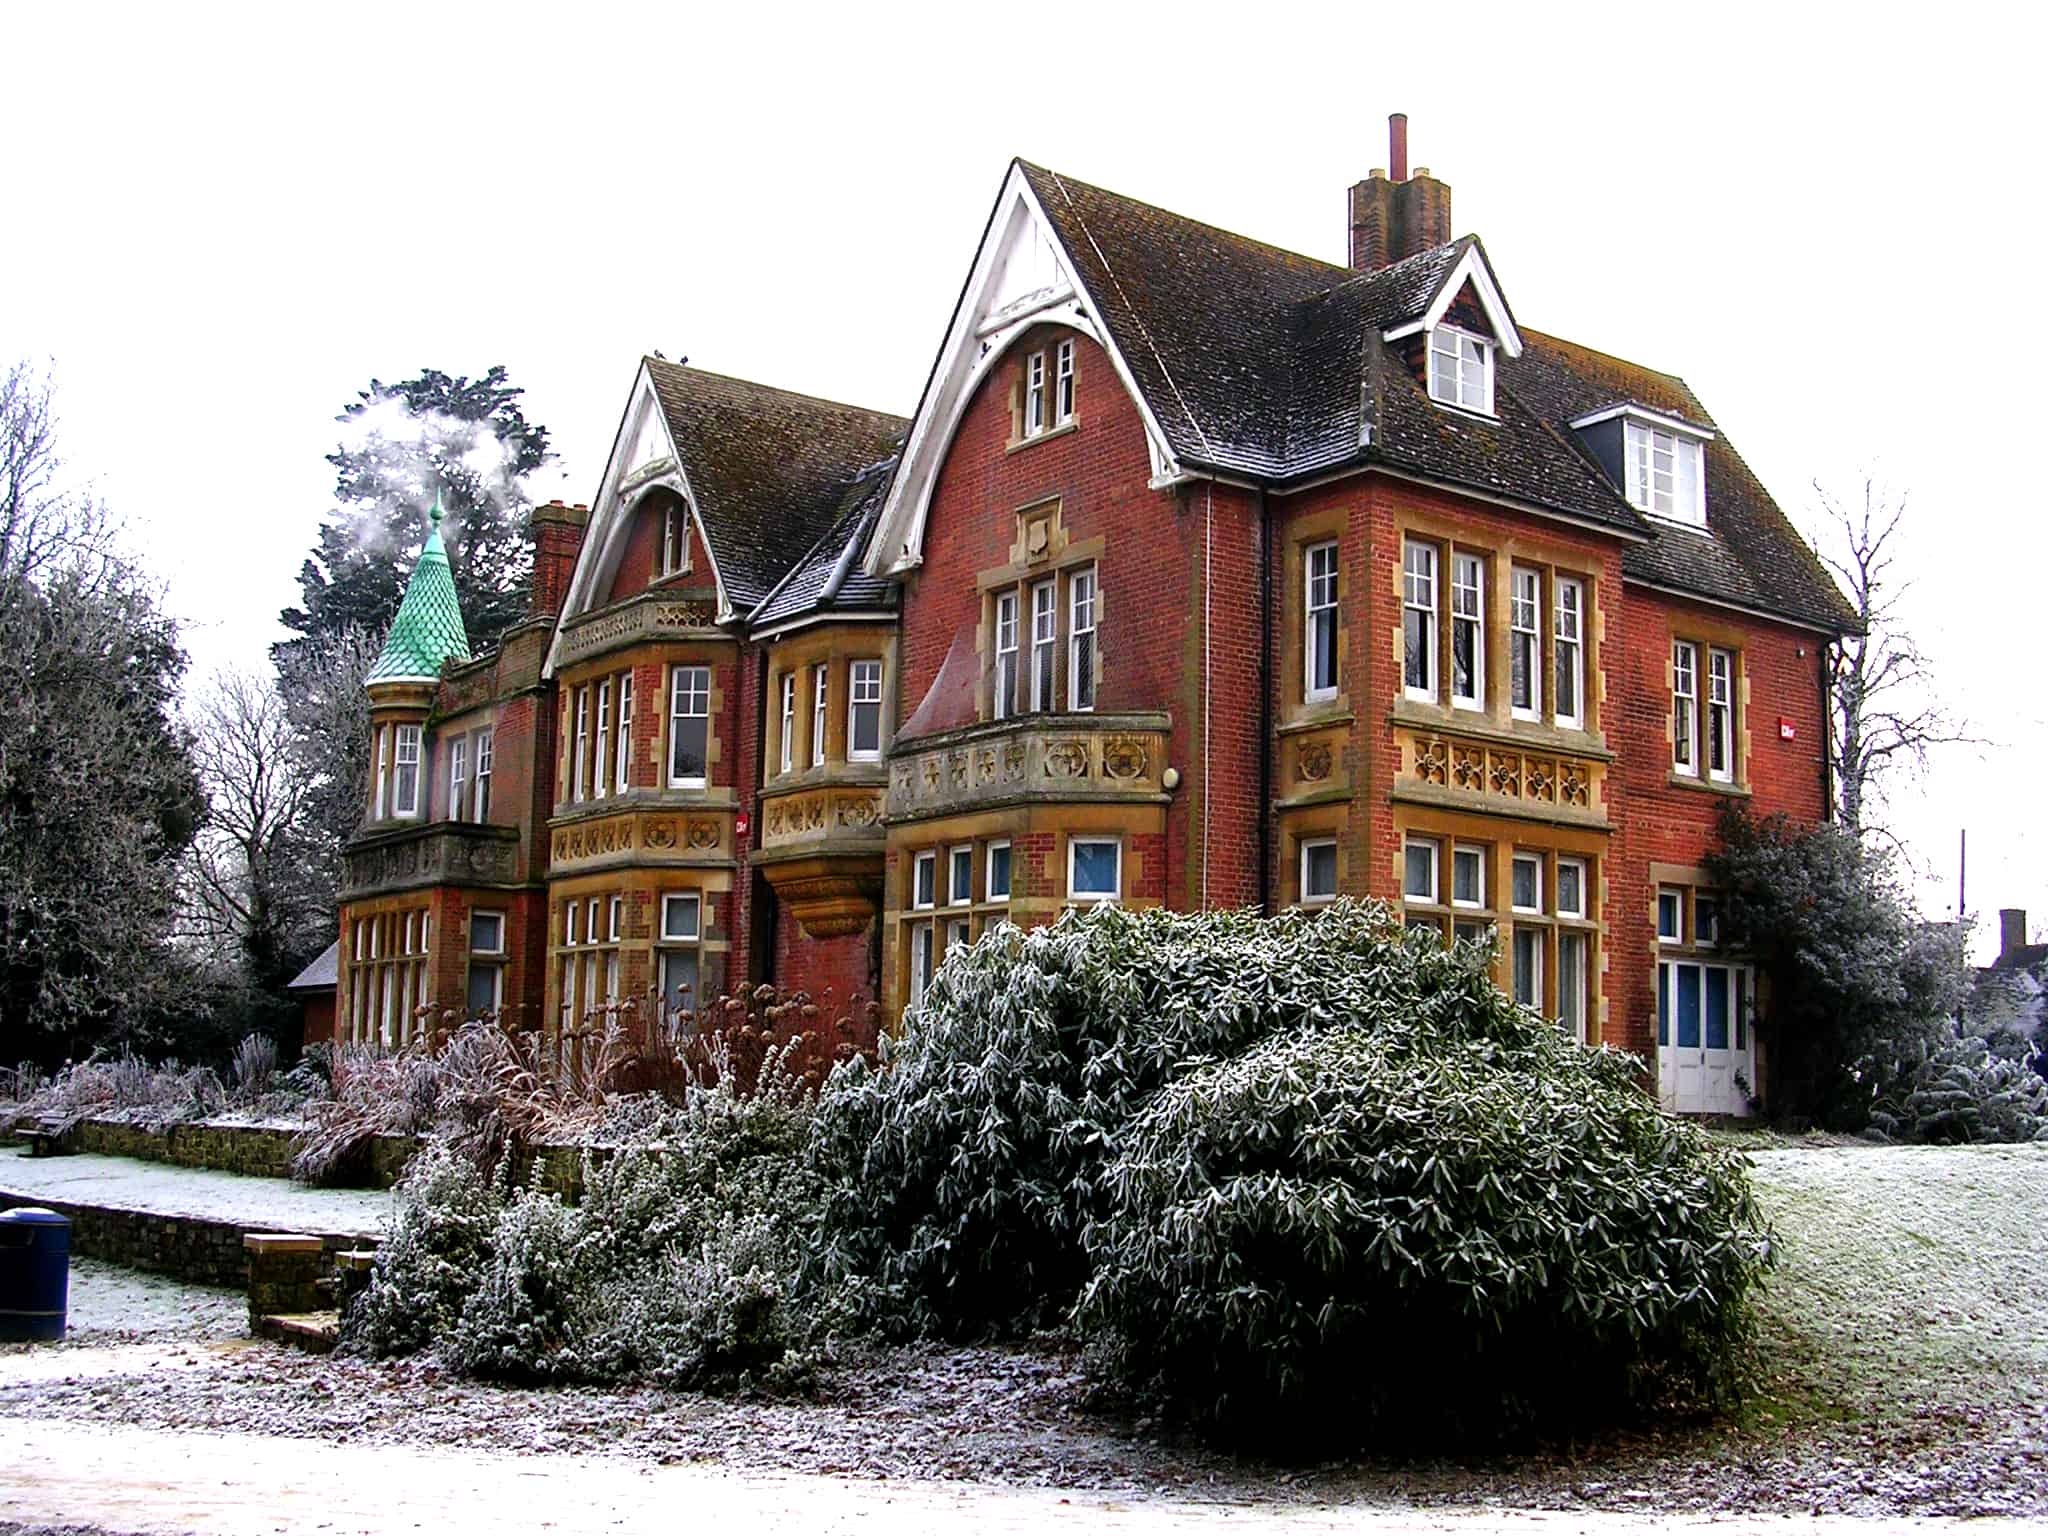 Goff's_Park_House,_Crawley,_Winter_Scene